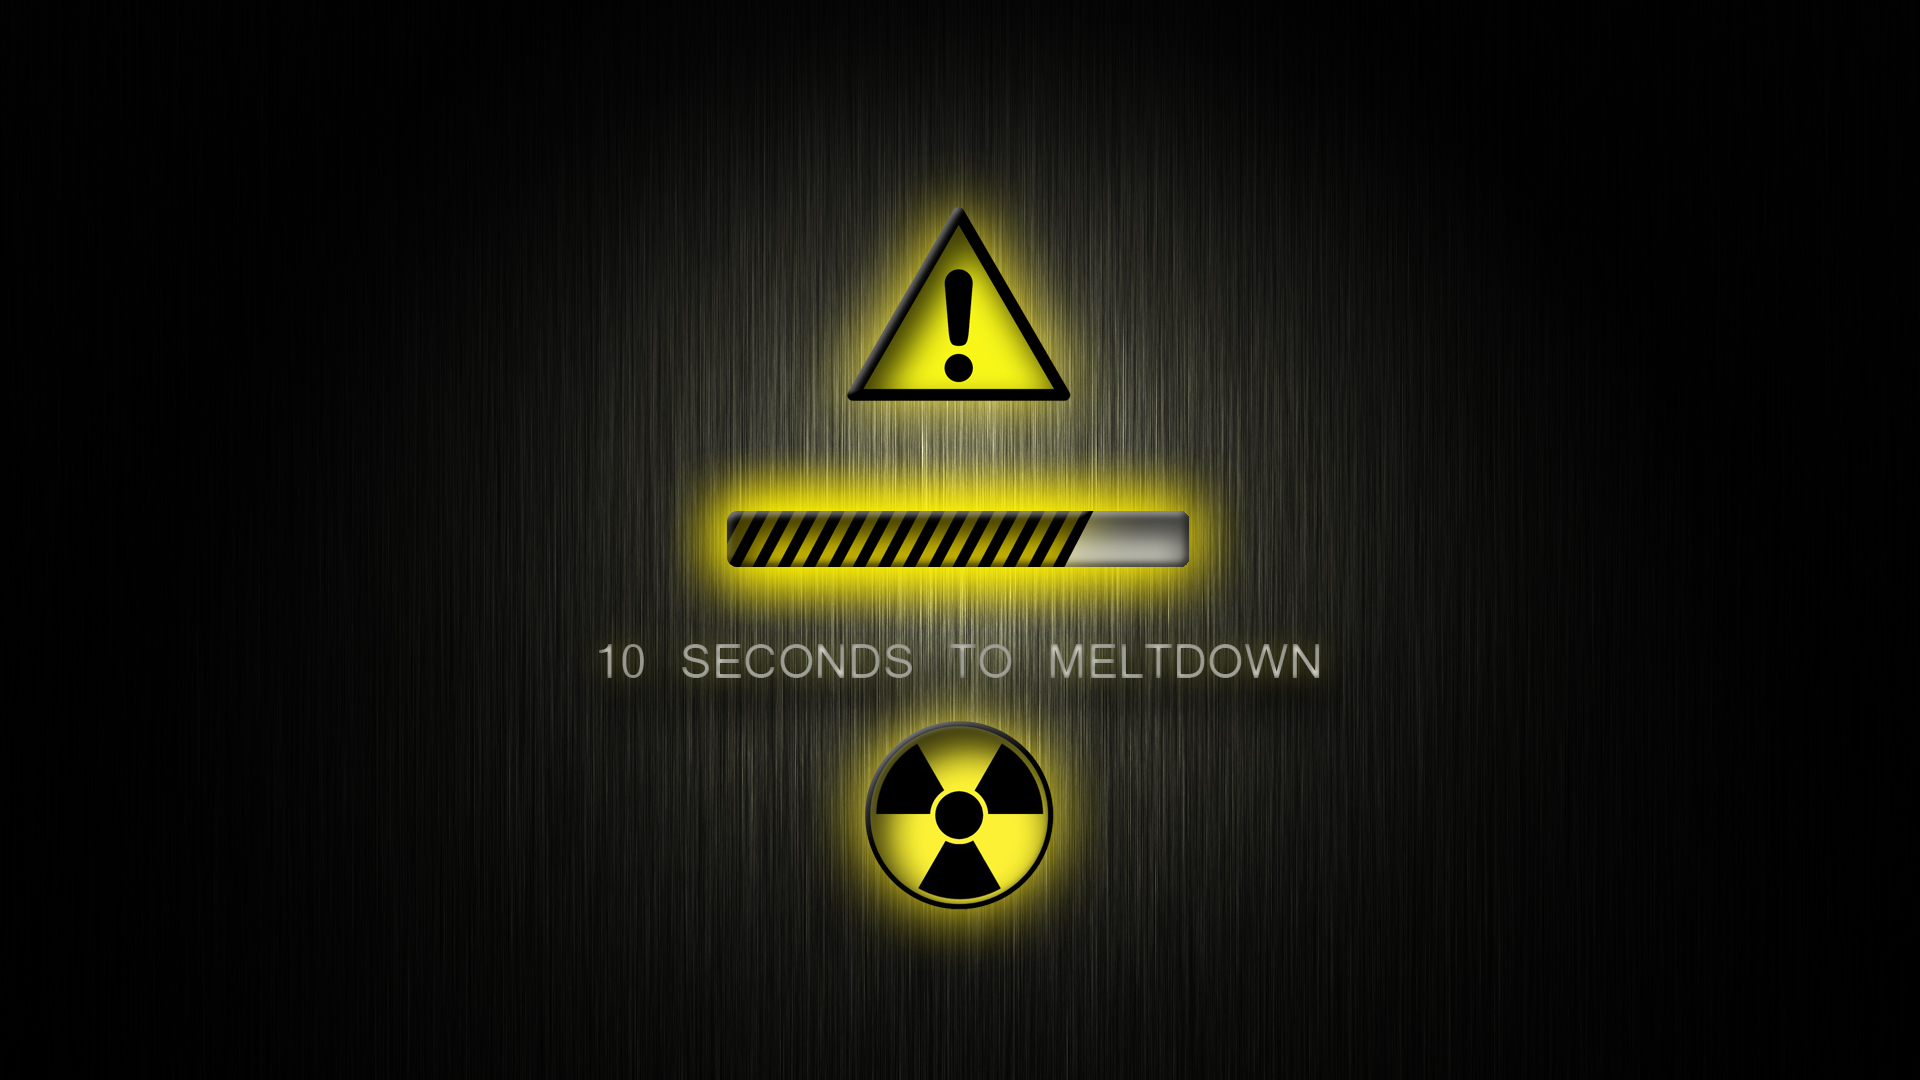 Meltdown Warning Nuclear Radiation Text Humor Funny Sci Fi Dark Wallpaperx1080